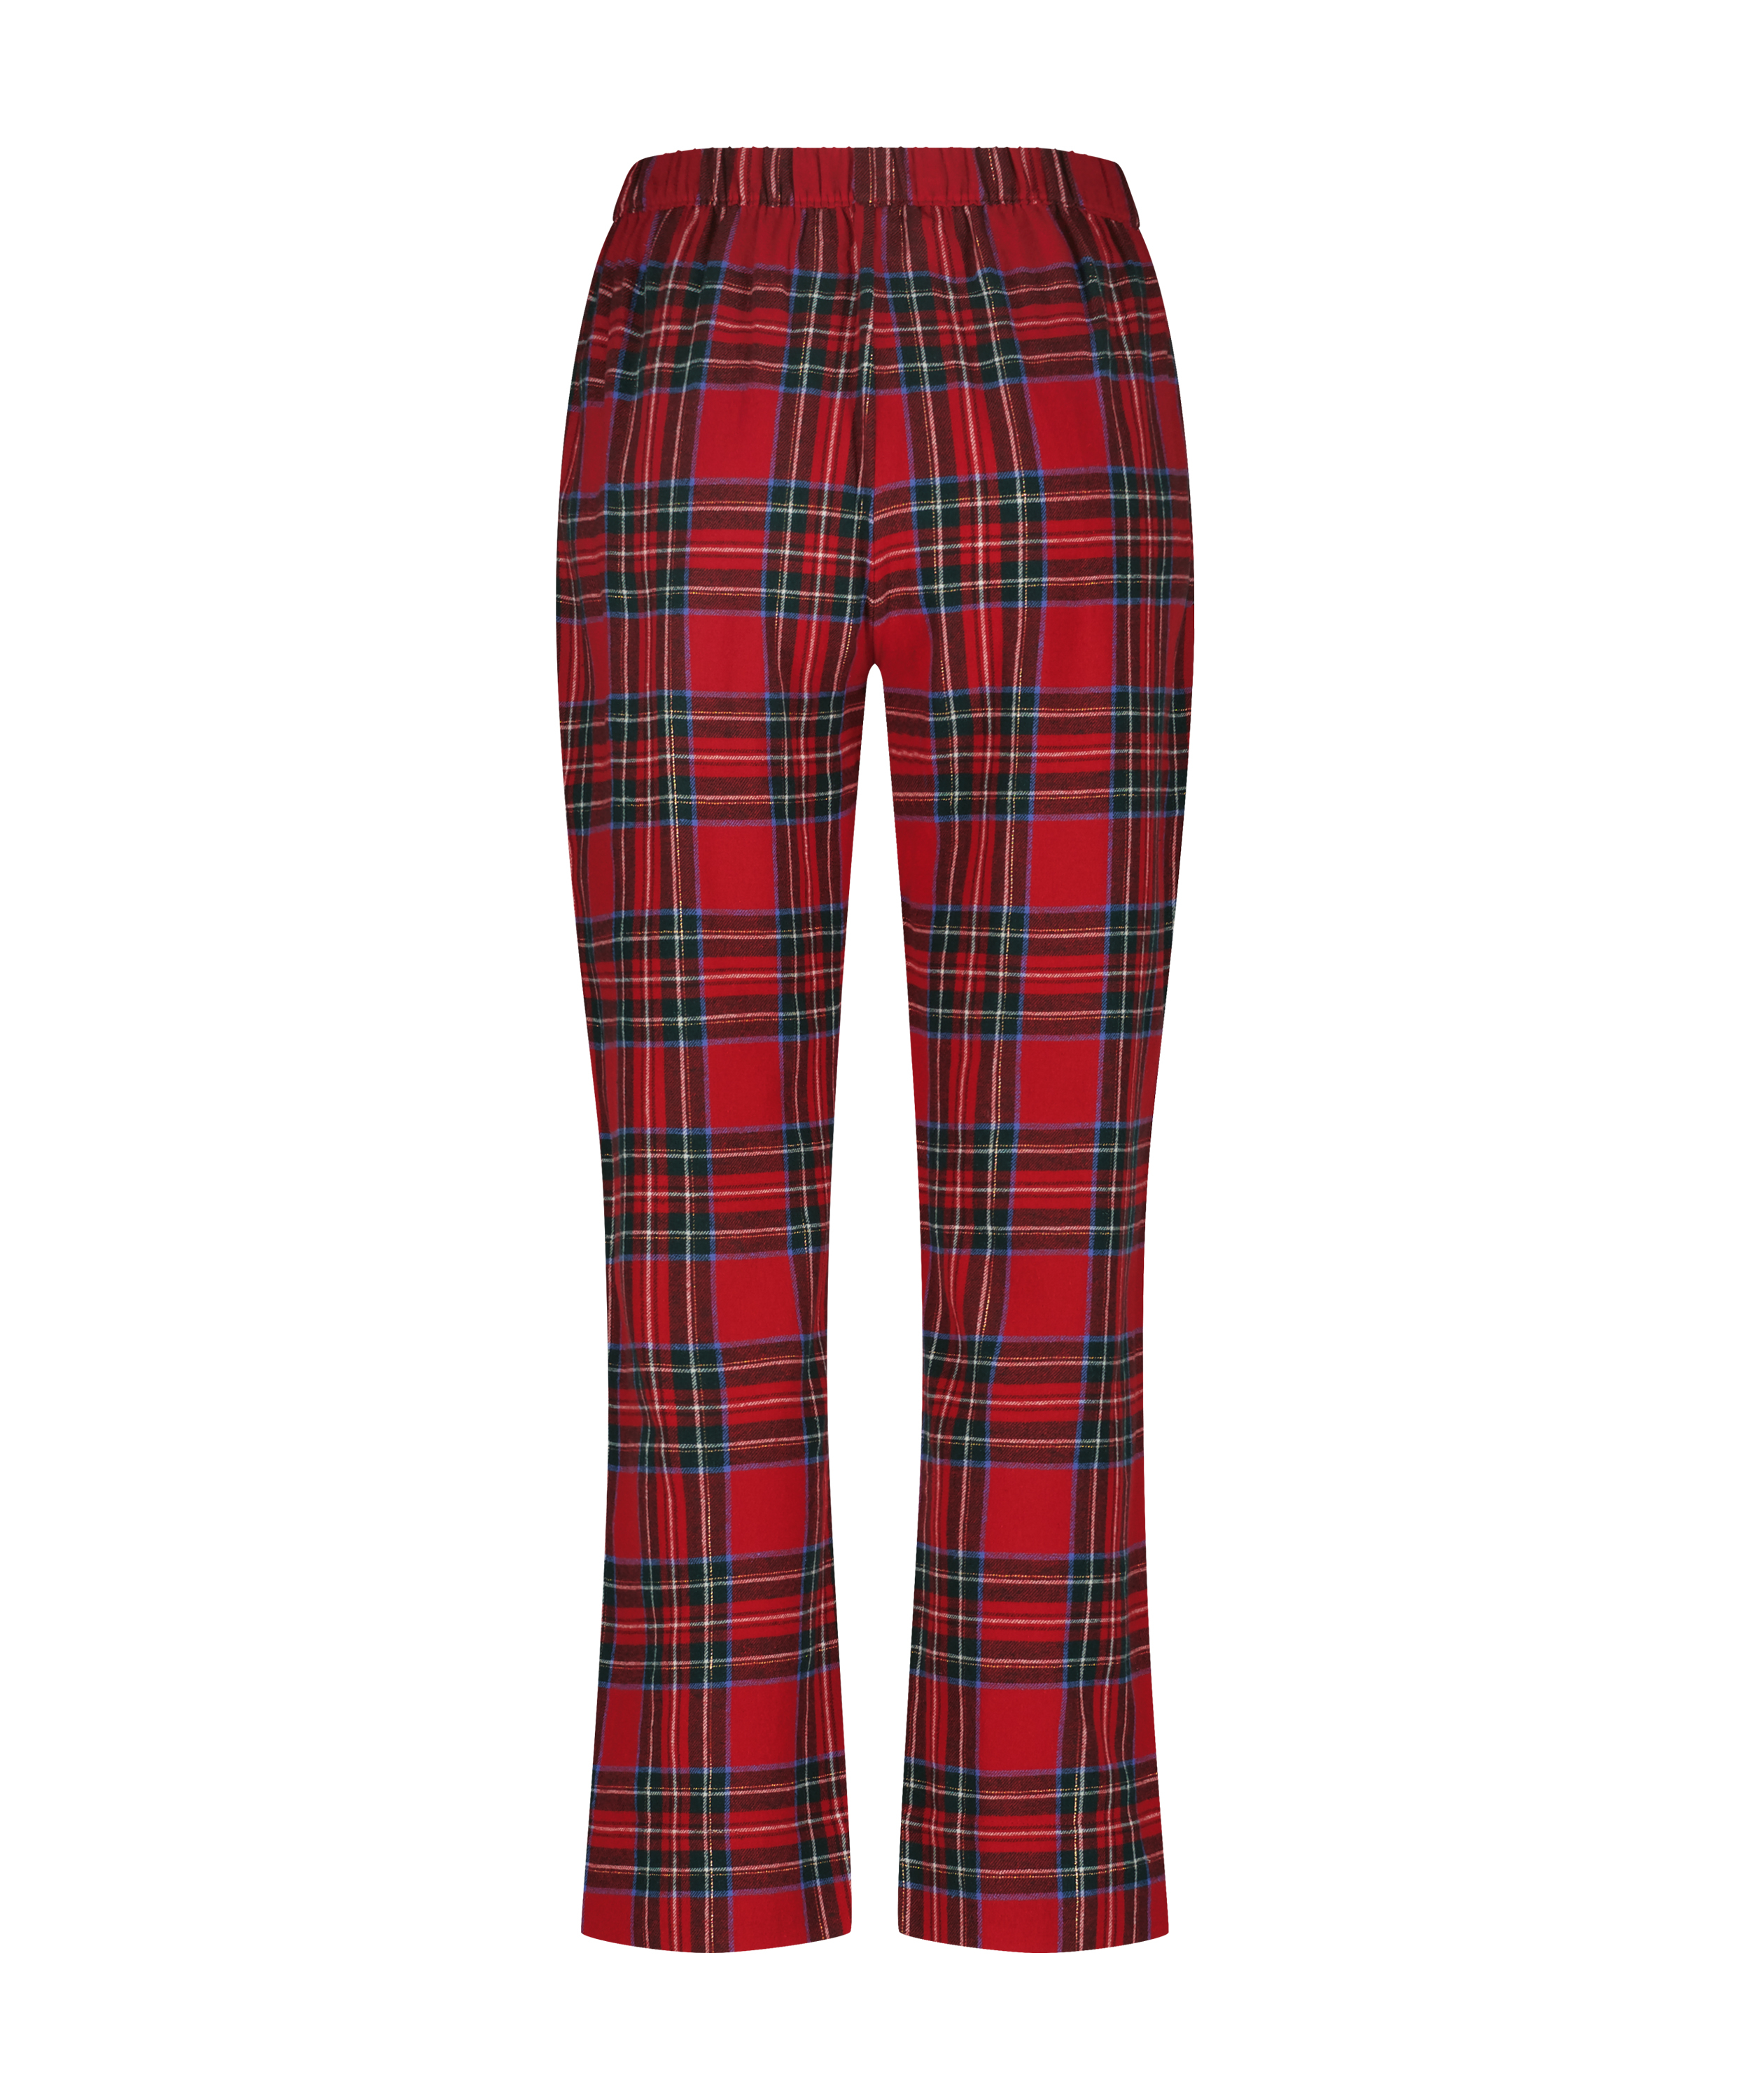 Pyjamasbukser af flonel, rød, main